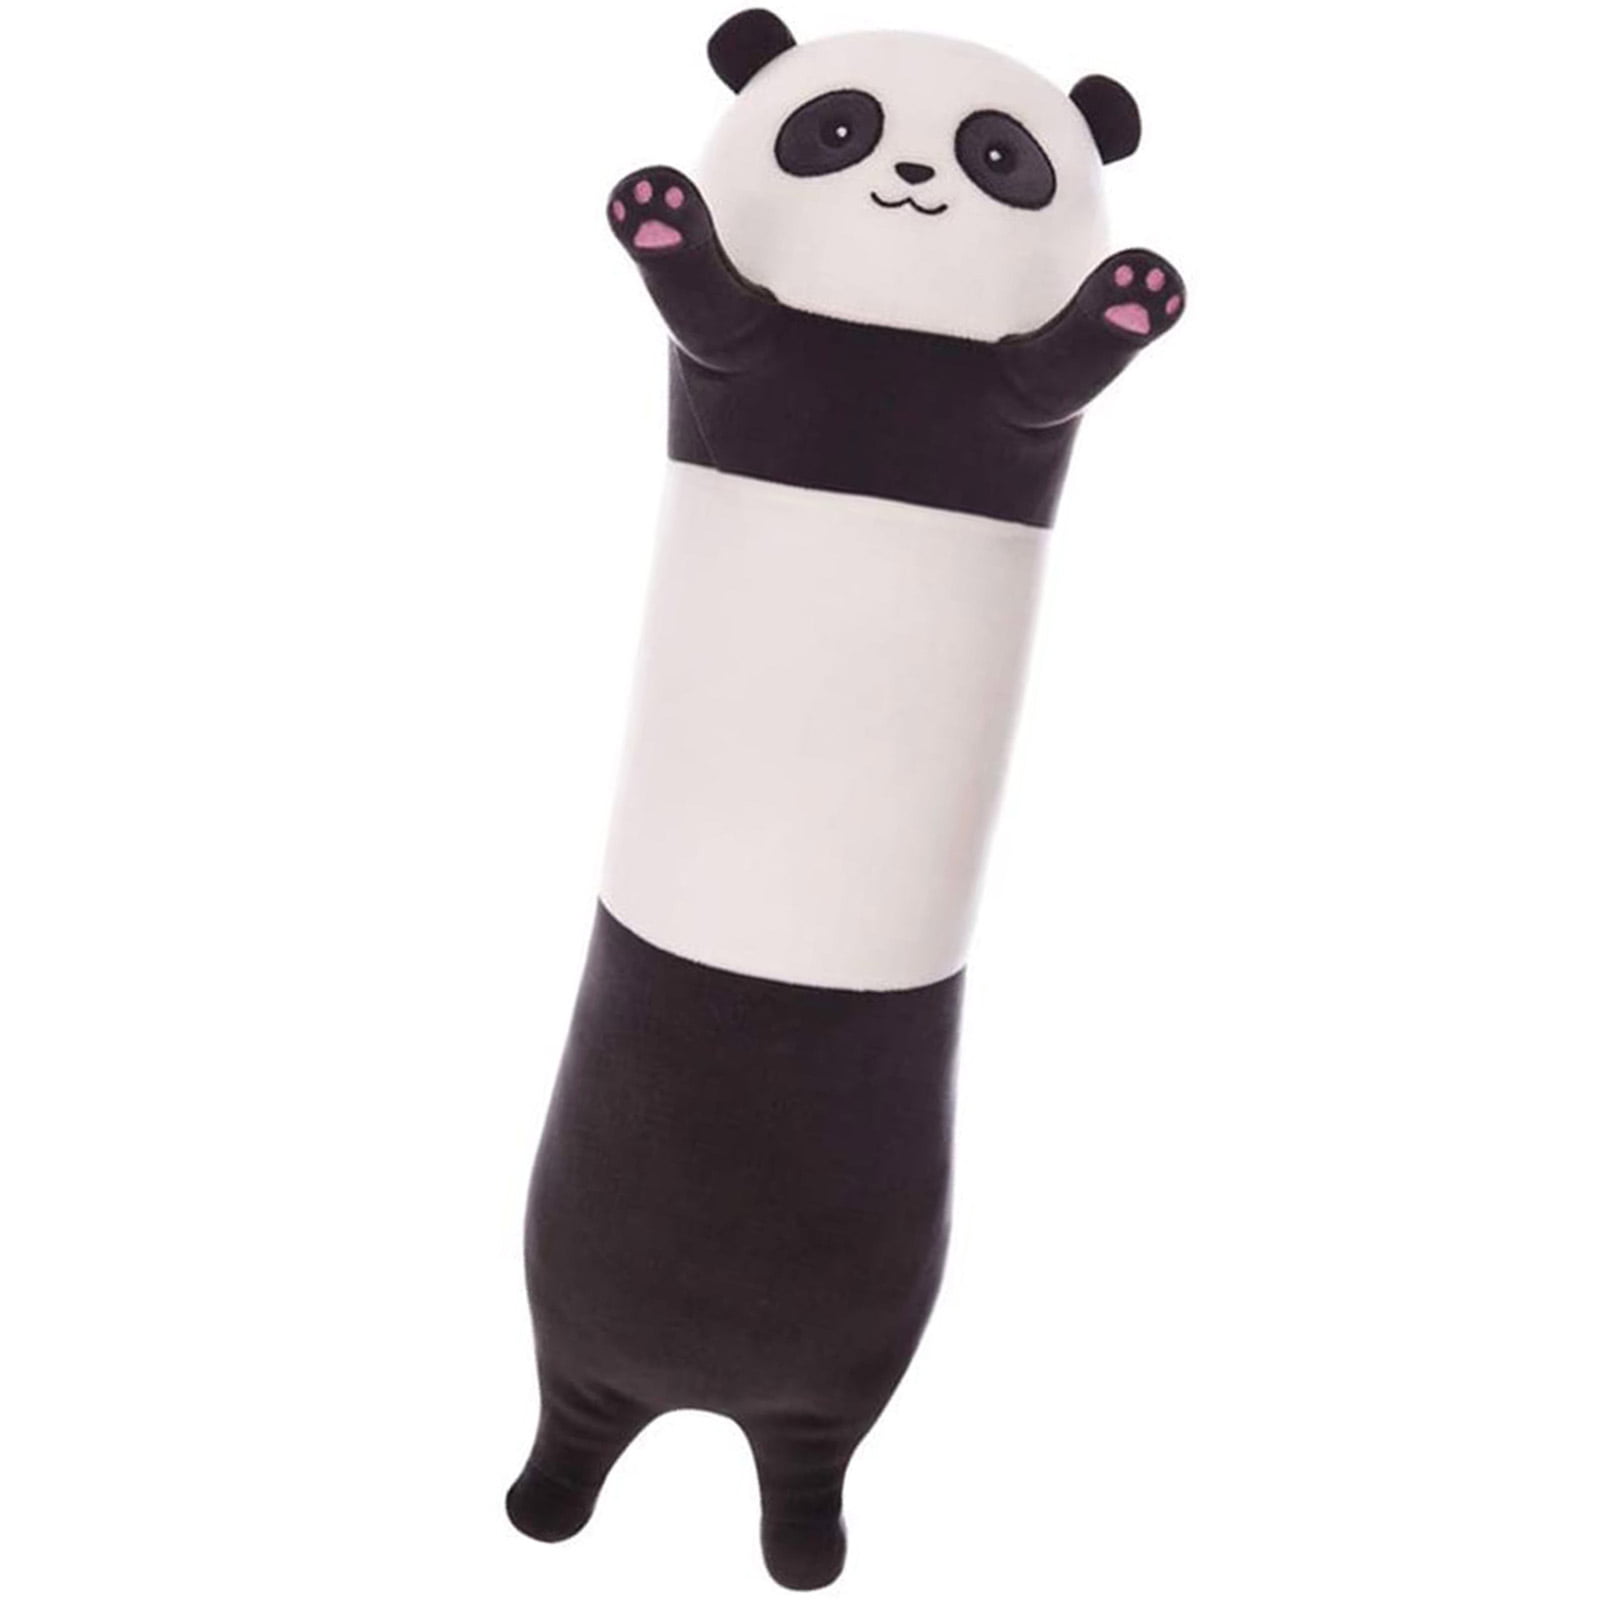 Cute Soft Plush Stuffed Panda Animal Doll Toy Pillow Holiday Gift 16 cm  R 